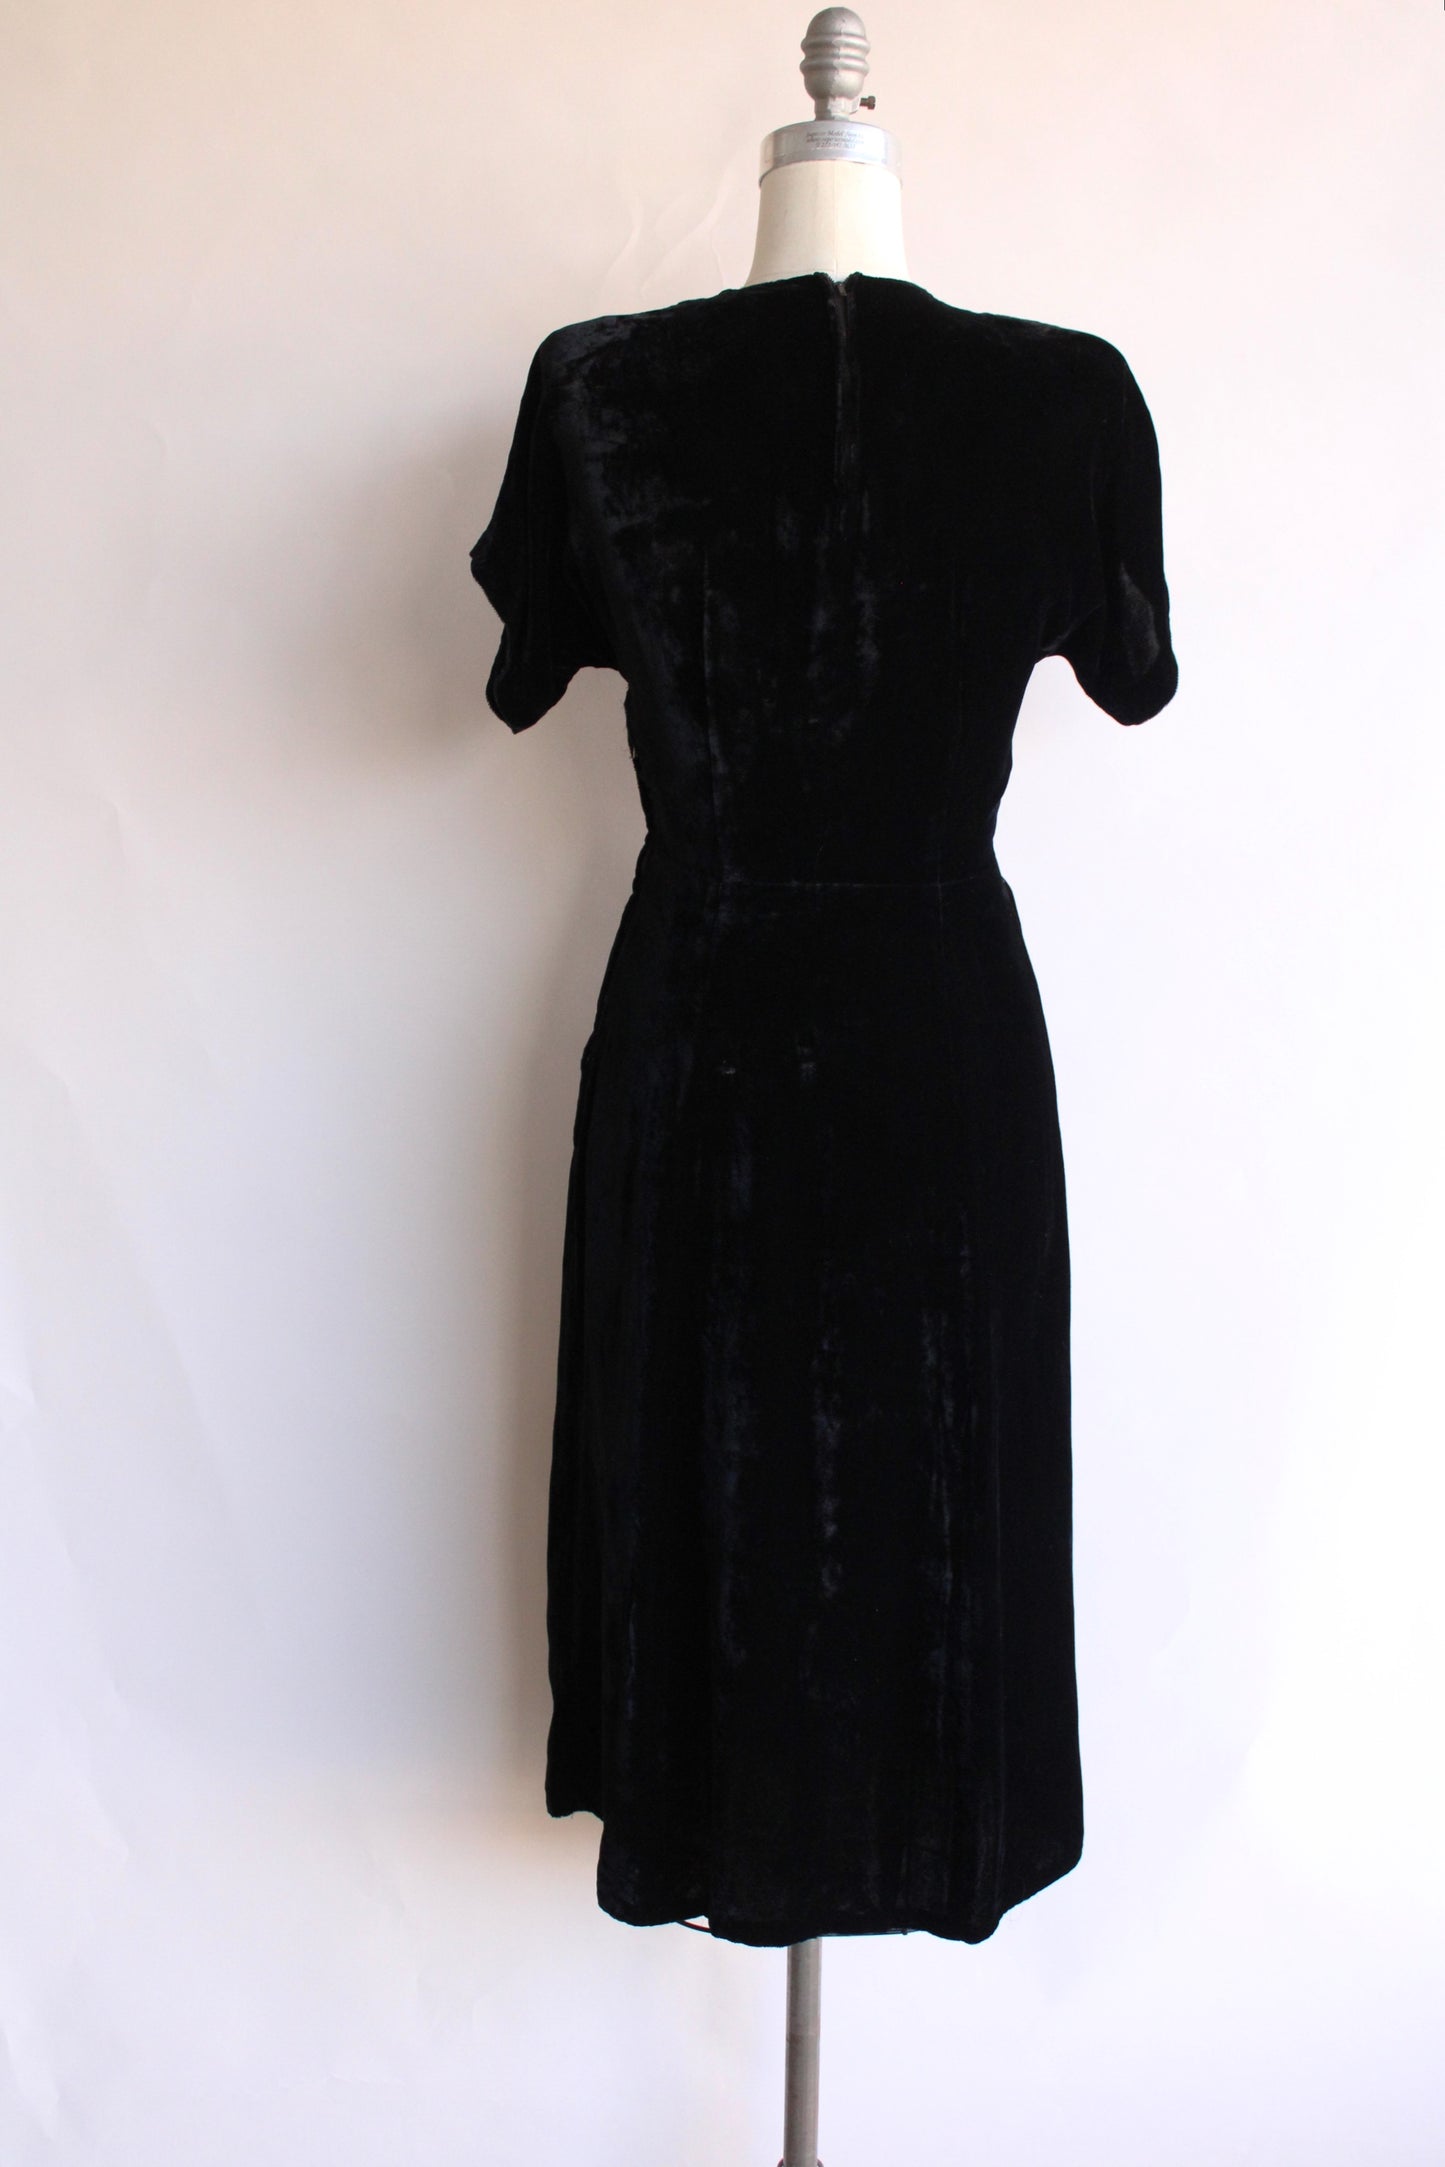 Vintage 1940s Black Velvet Dress with Rhinestone Details